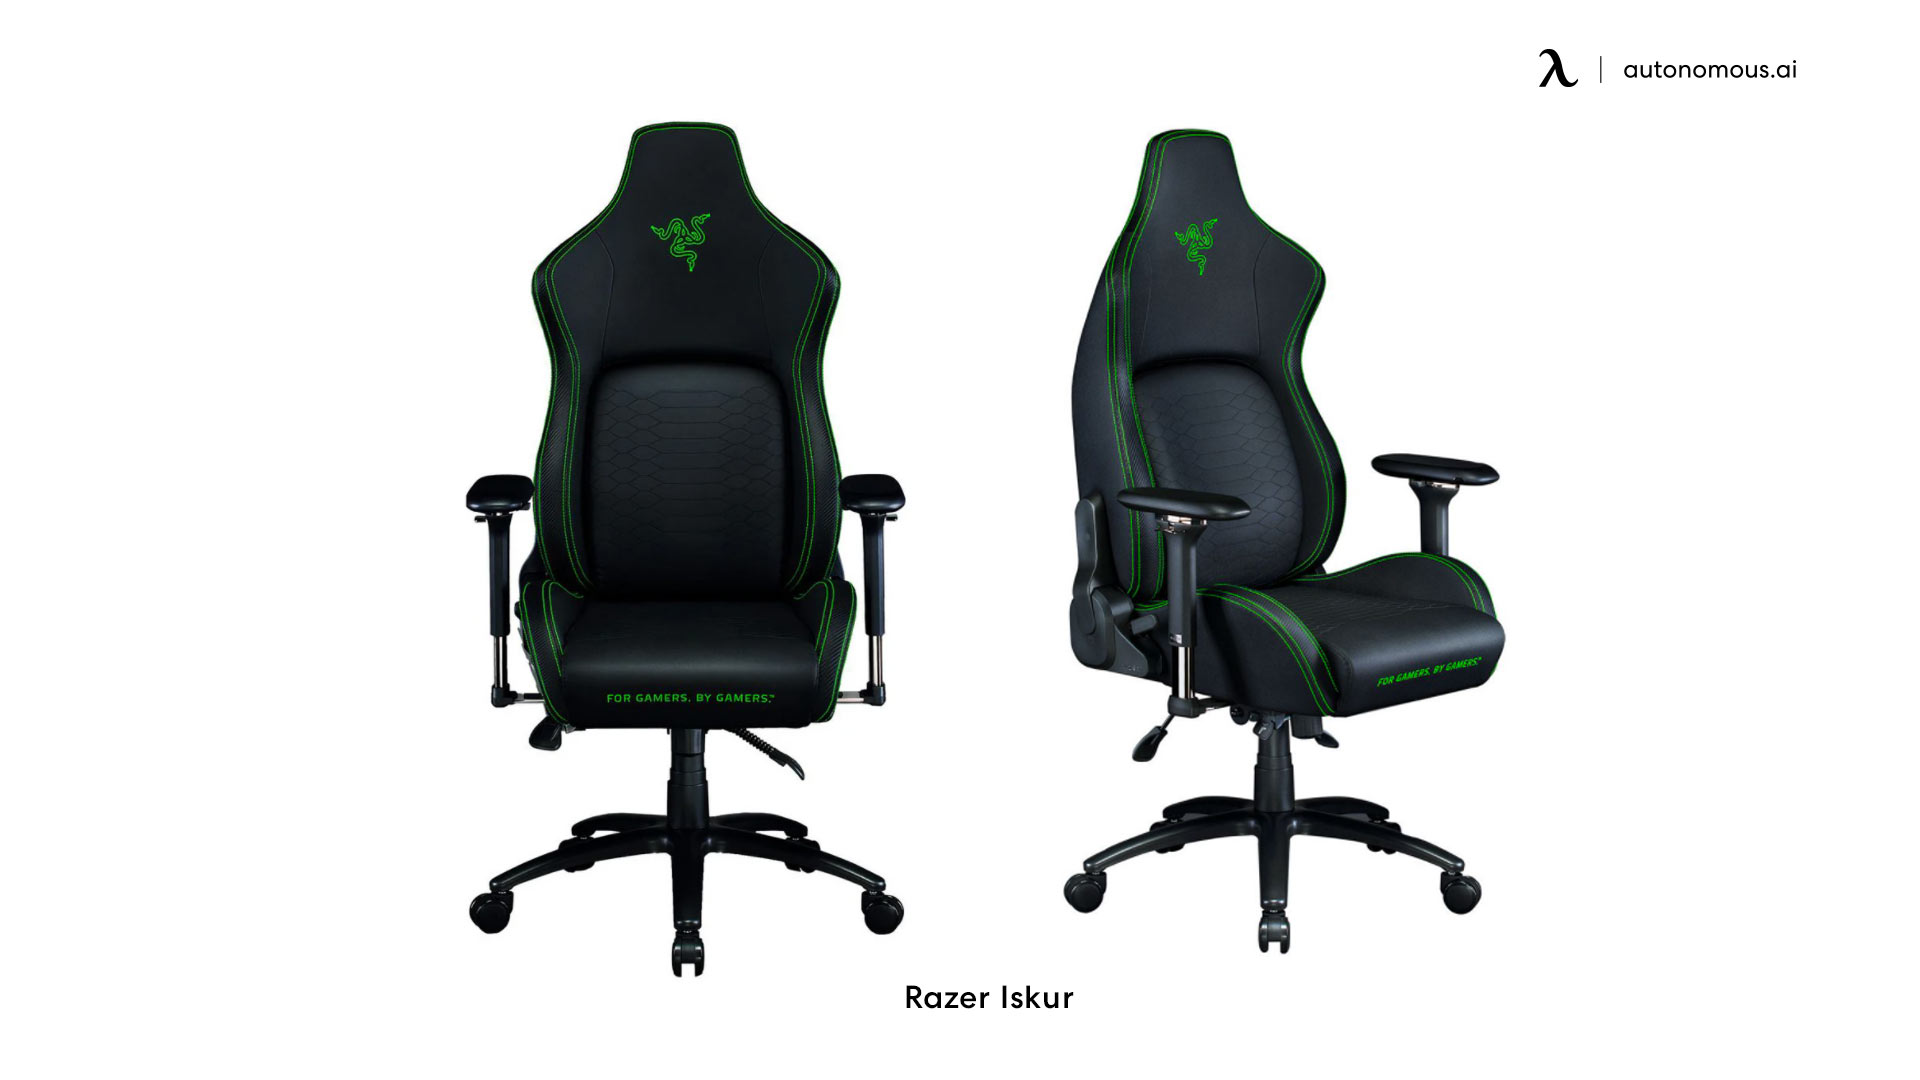 Razer Iskur Black Friday gaming chair